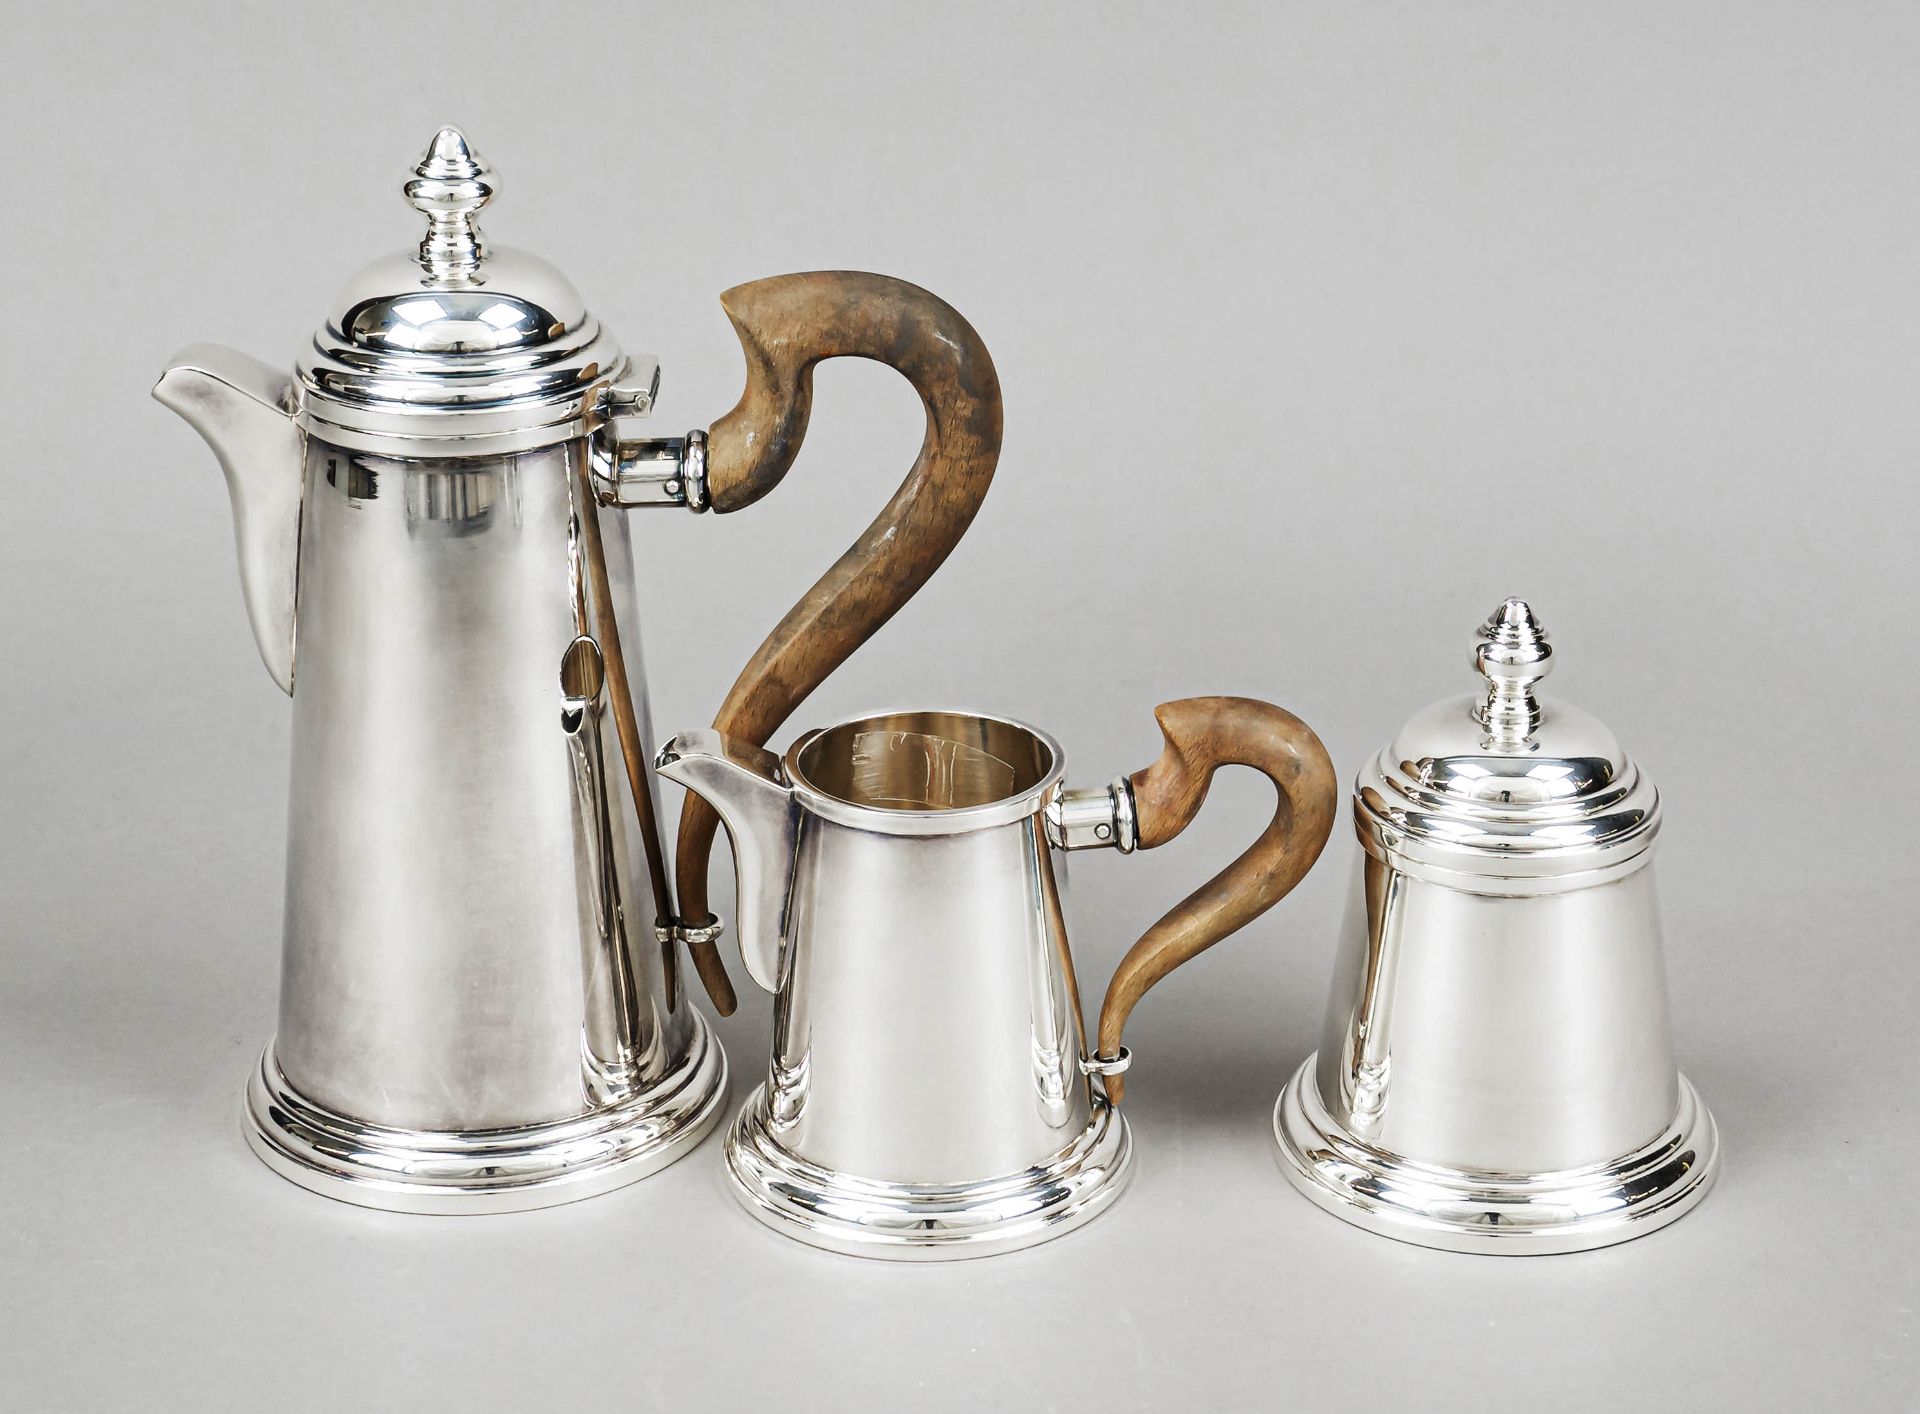 Three-piece coffee pot, Italy, 2nd half 20th century, maker's mark Antonio Caruso, Palermo, silver